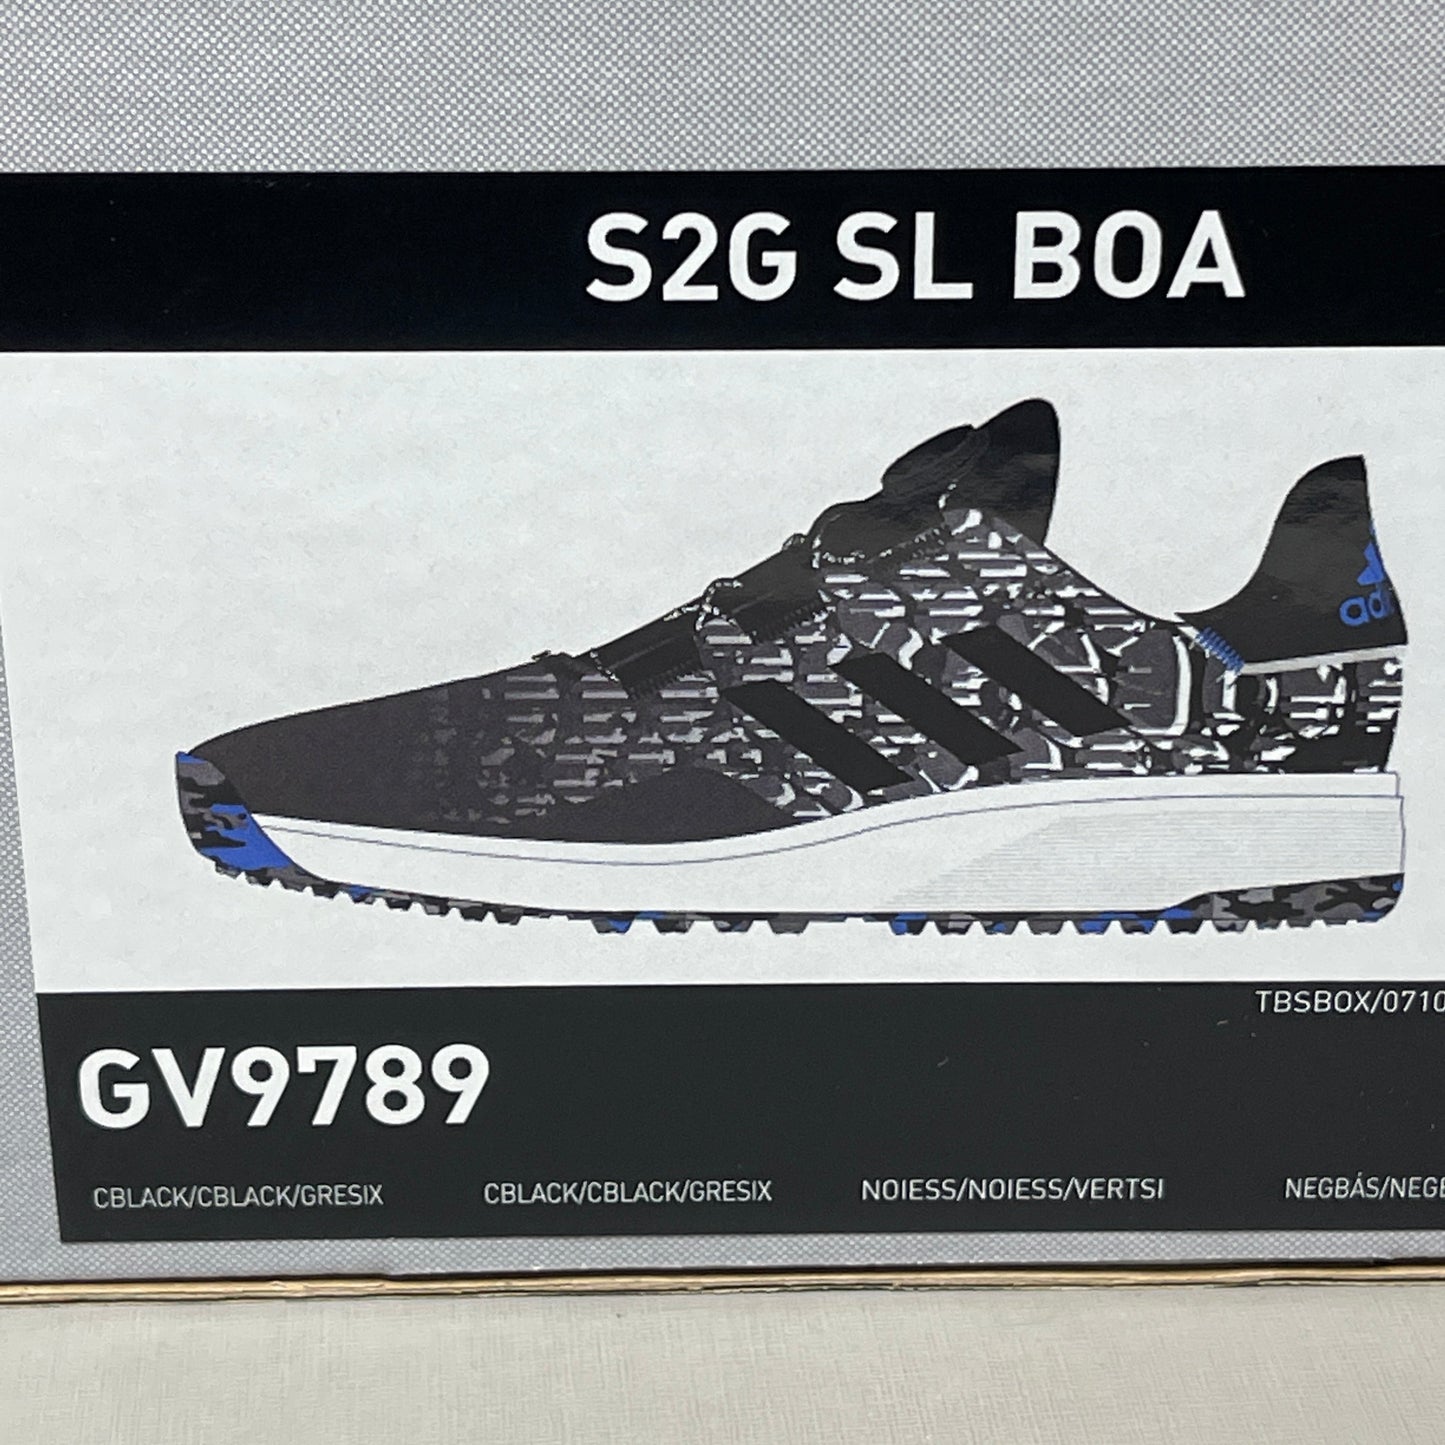 ADIDAS Golf Shoes S2G SL BOA Spikeless Men's Sz 12 Black / Grey GV9789 (New)